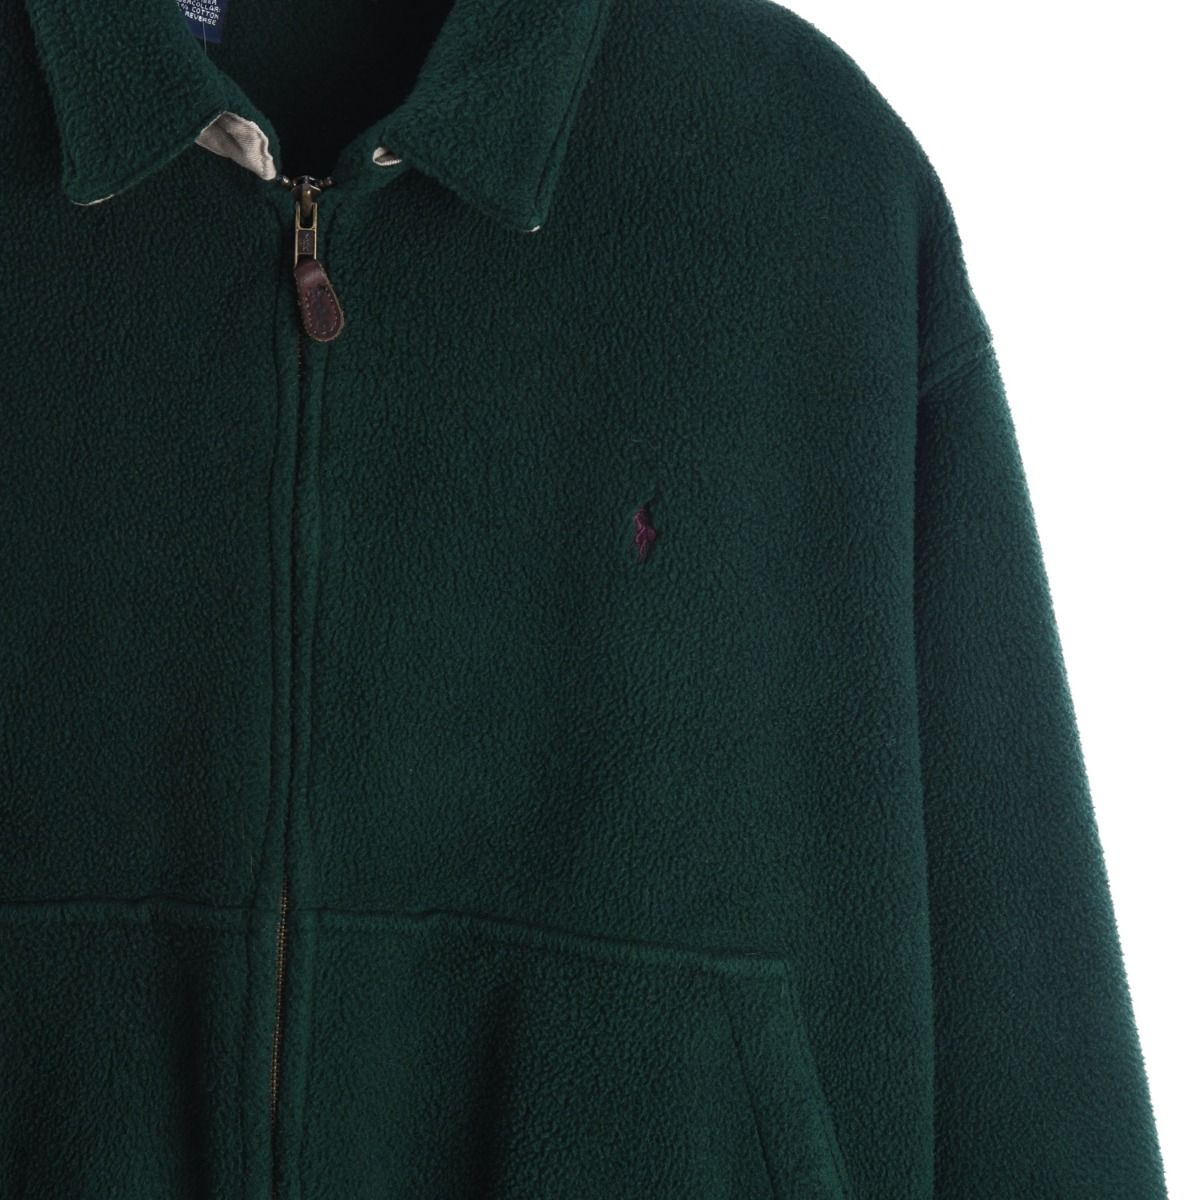 Polo Ralph Lauren 1980s Fleece Harrington Jacket